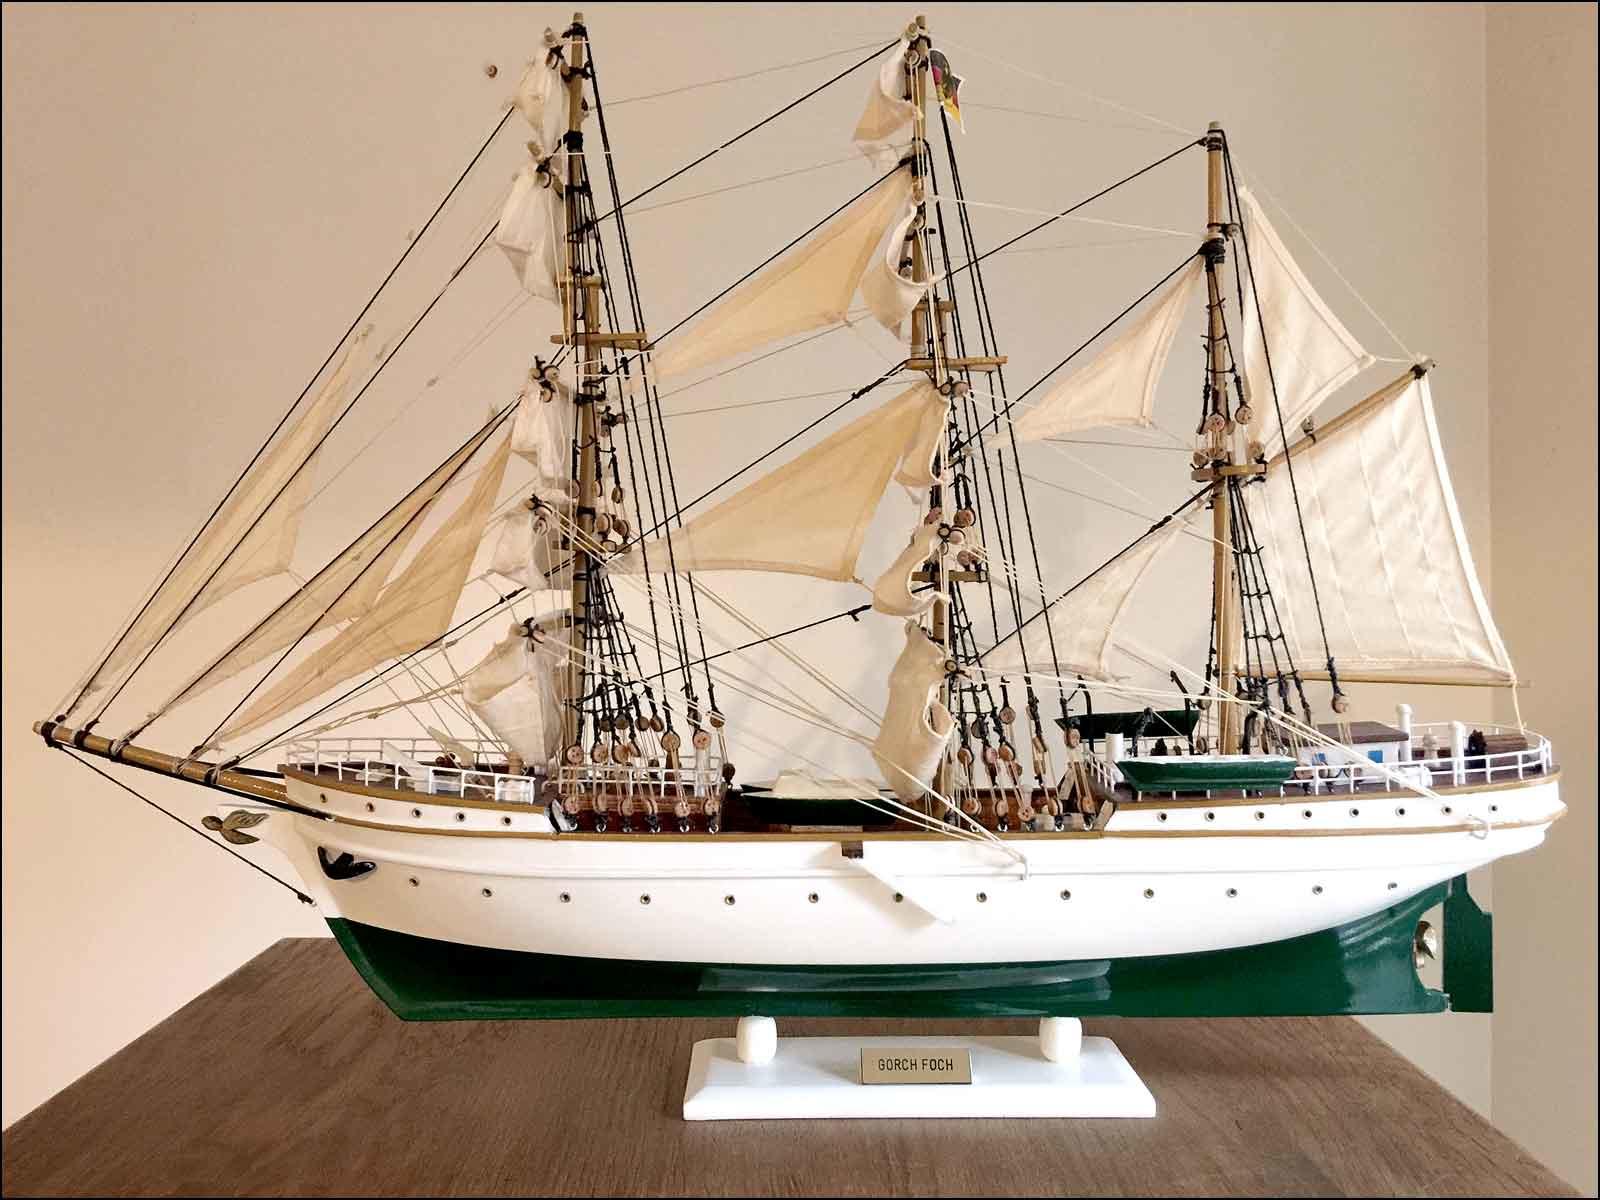 wooden scale model ship Gorch Fock